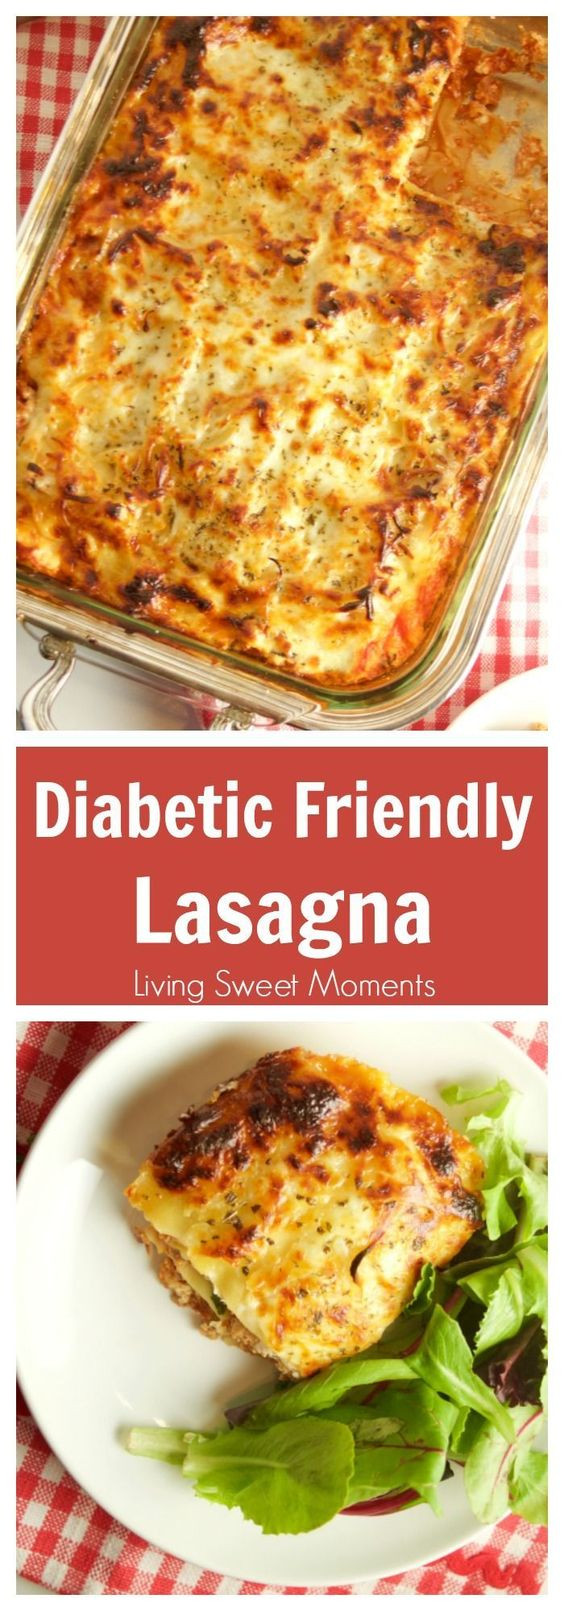 Diabetic Friendly Dinners
 Diabetic Lasagna Recipe